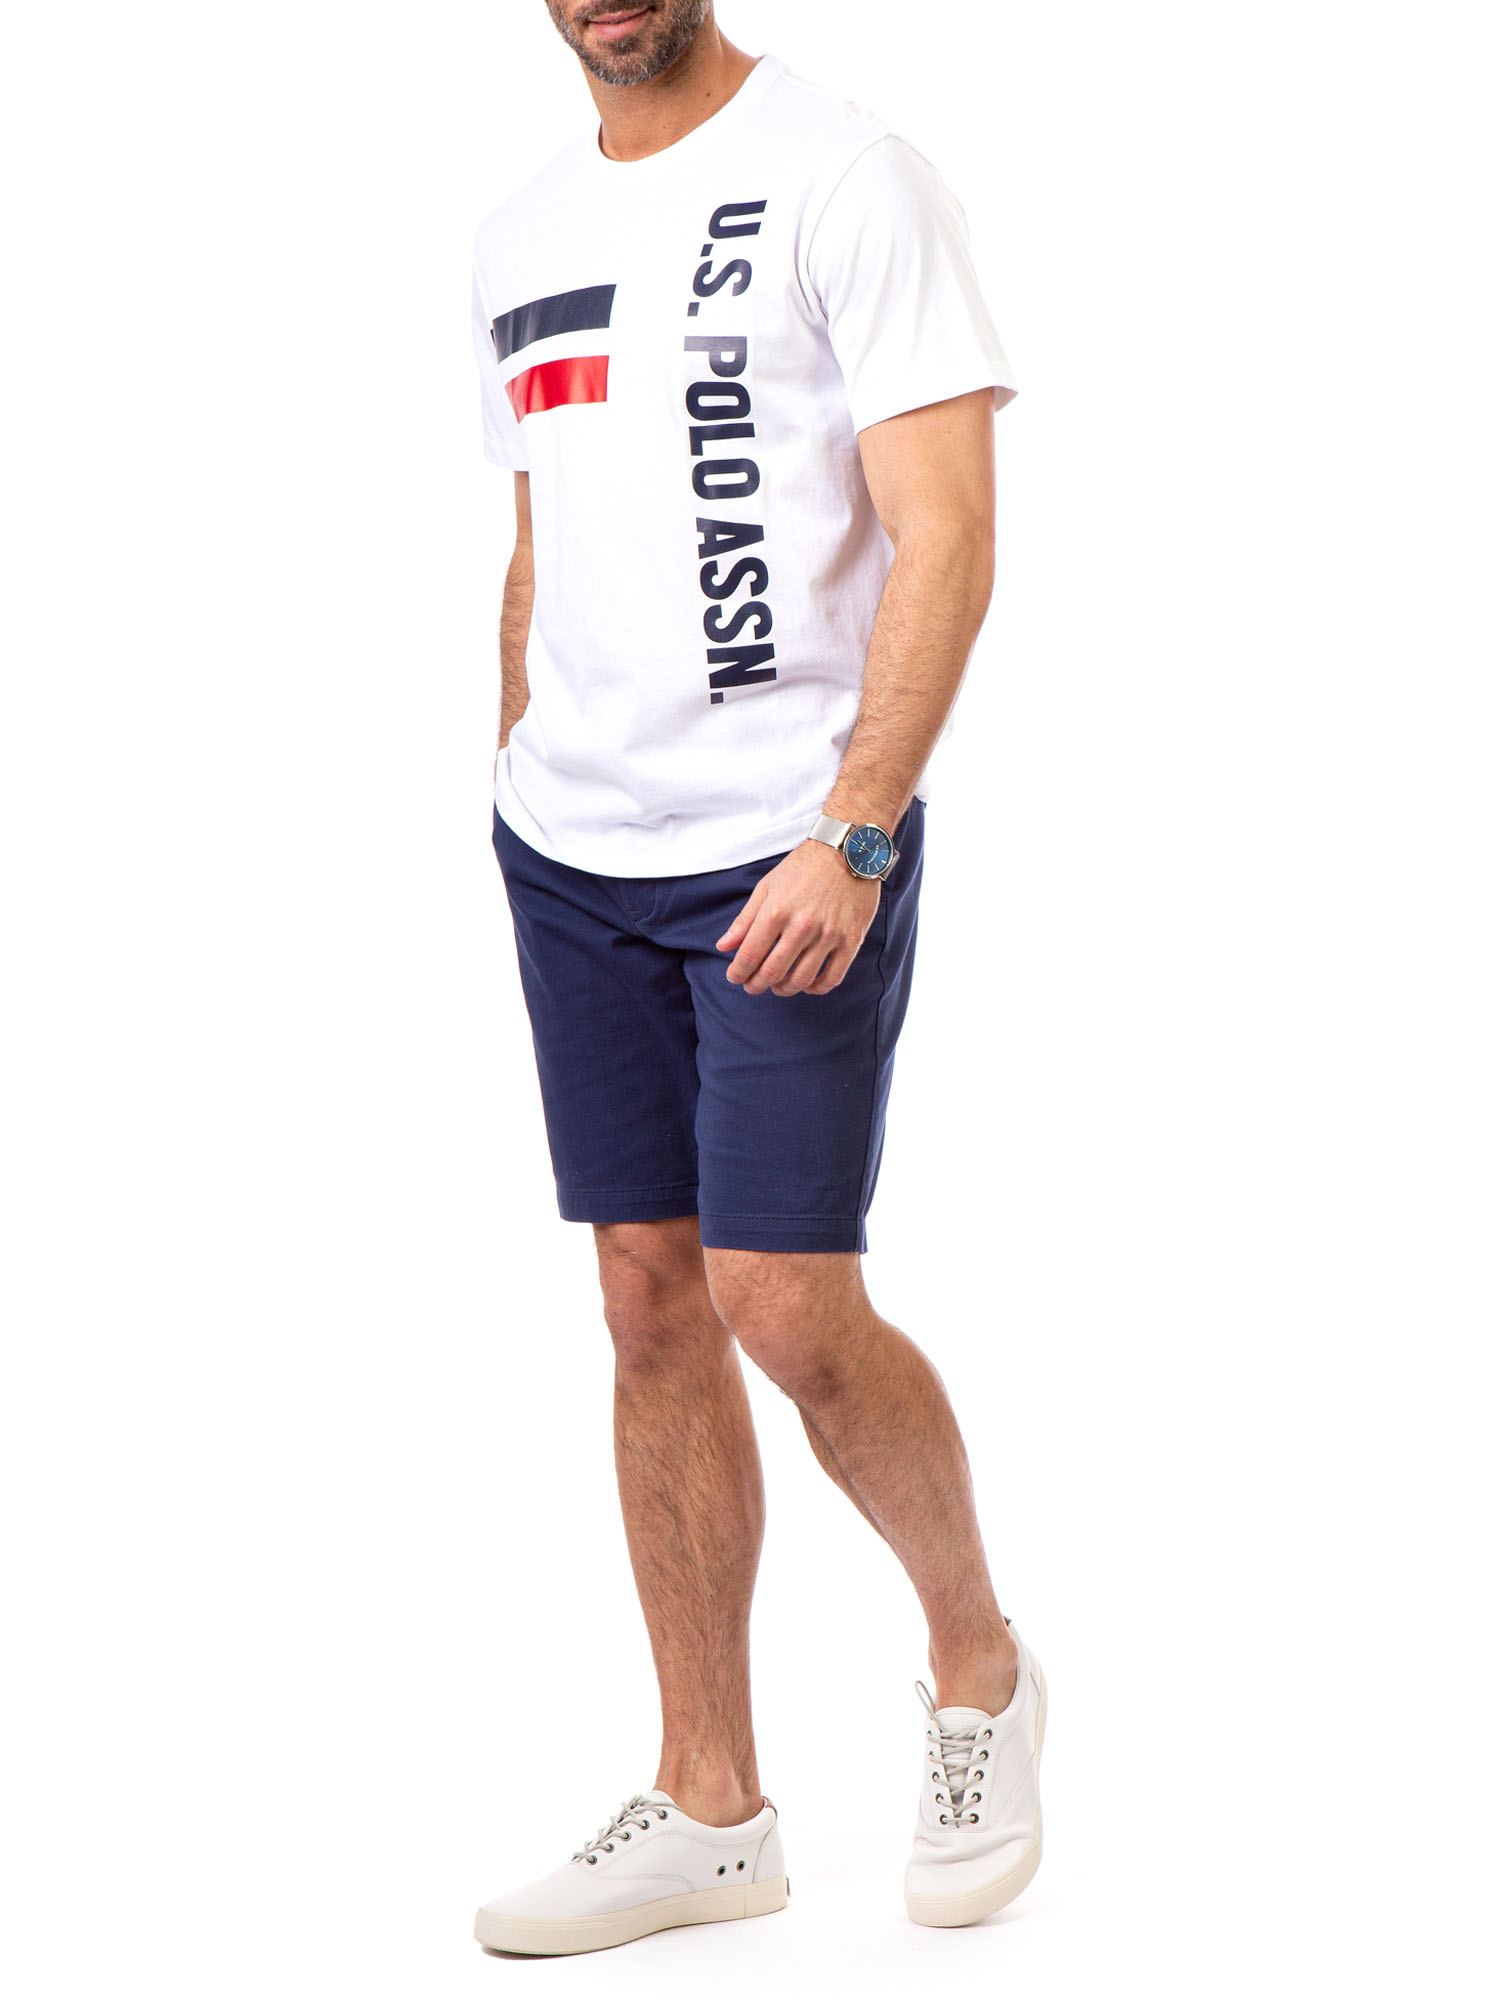 U.S. Polo Assn. Men's Short Sleeve Printed T-Shirt - image 2 of 4